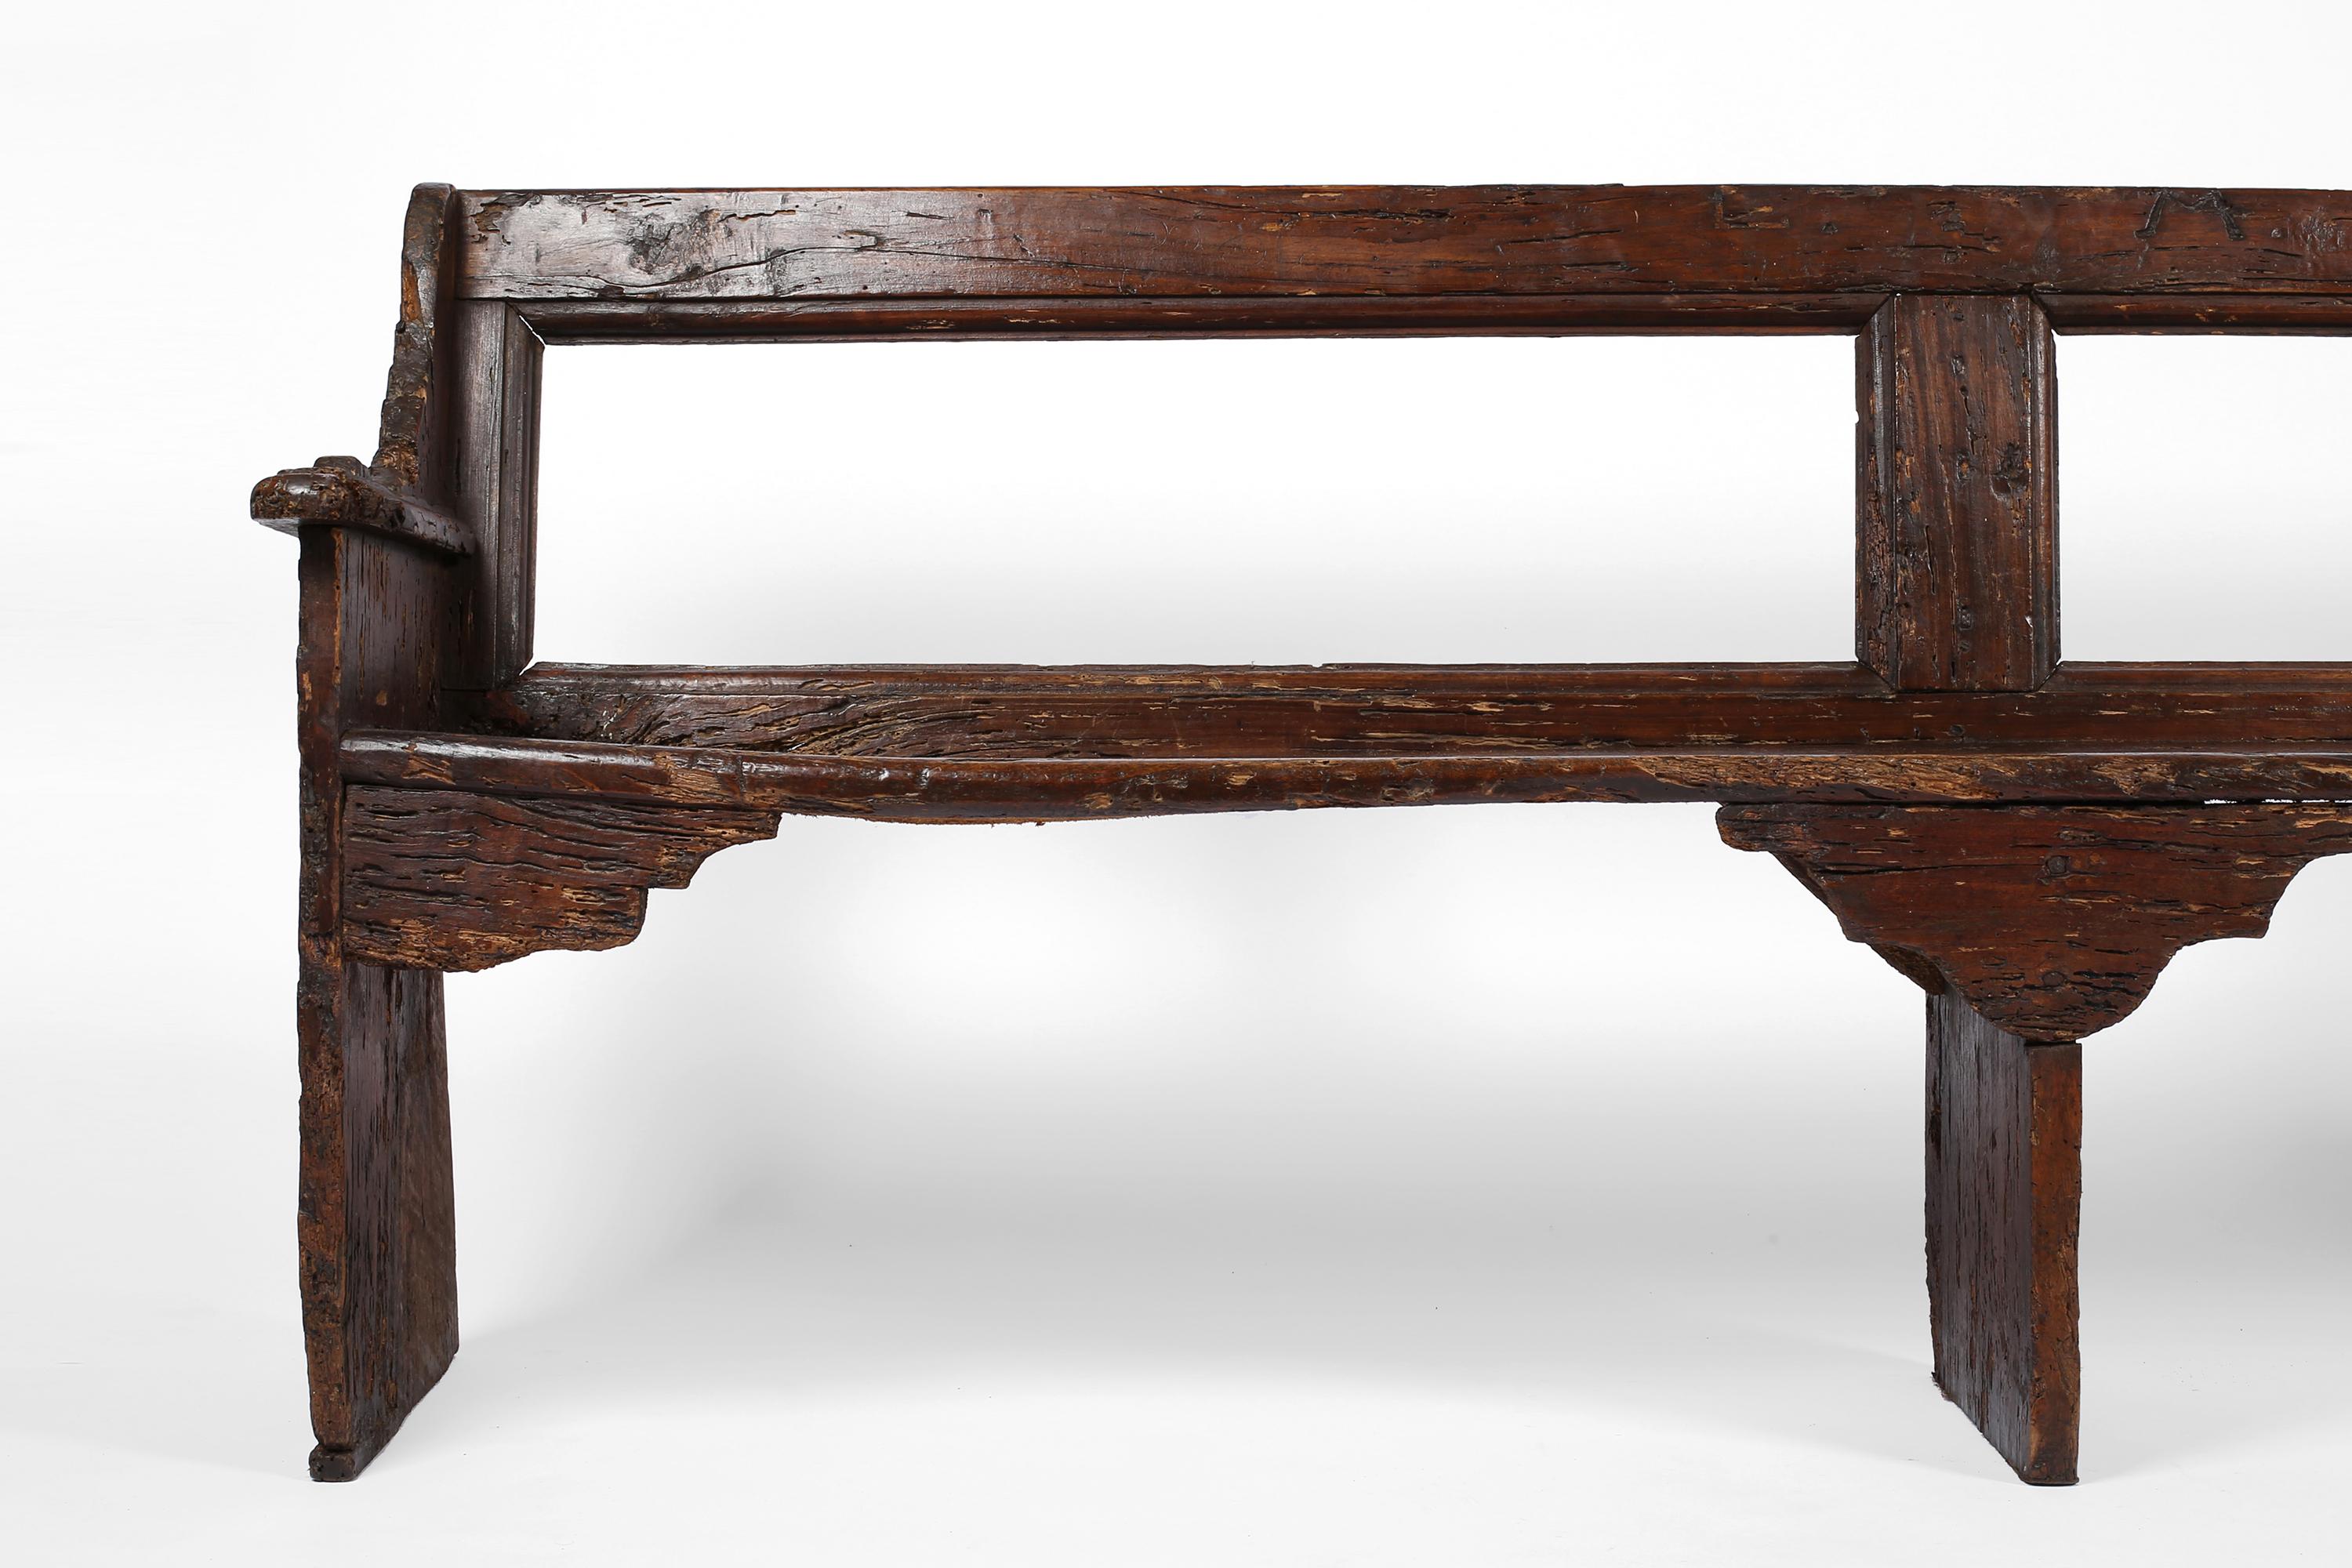 17th Century Italian Tuscan Walnut Rustic Wabi-Sabi Bench In Distressed Condition For Sale In London, GB